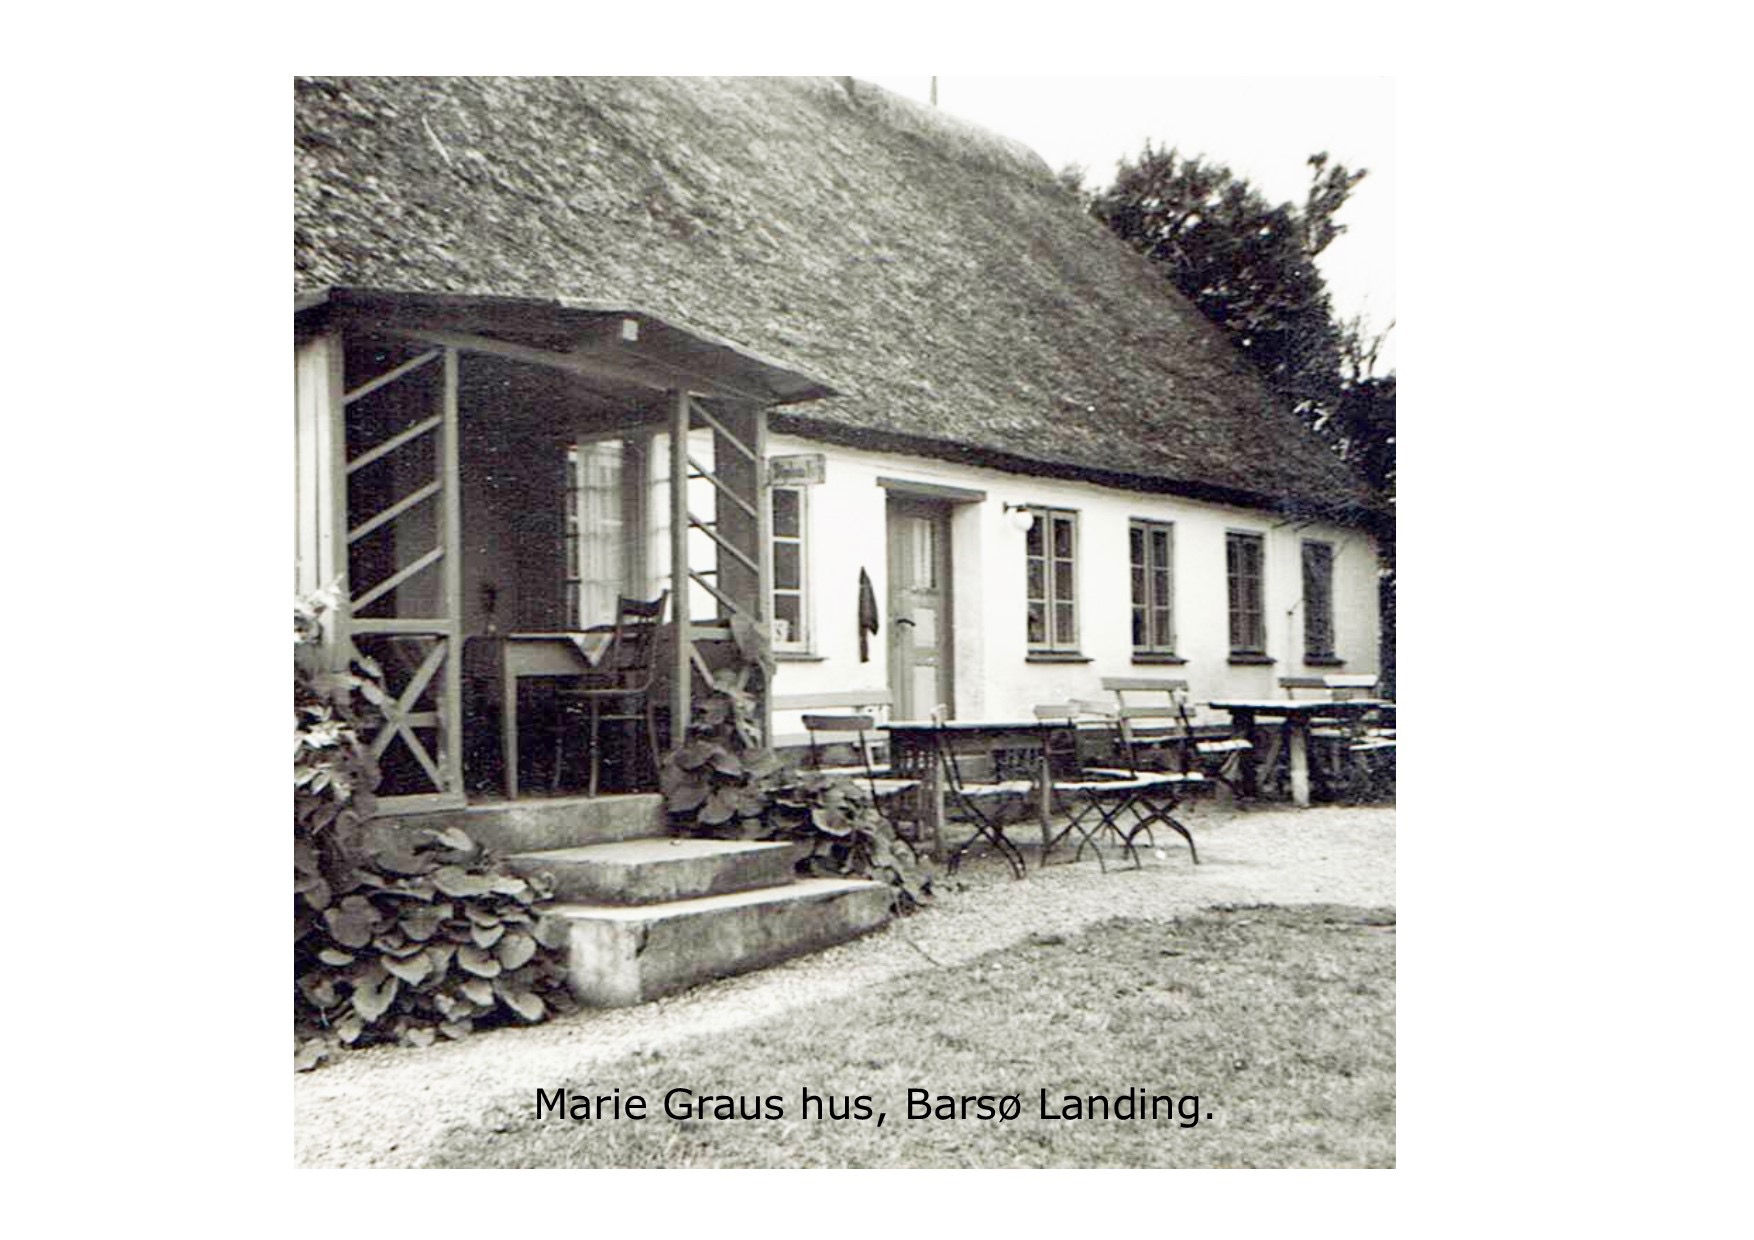 Marie Graus hus 